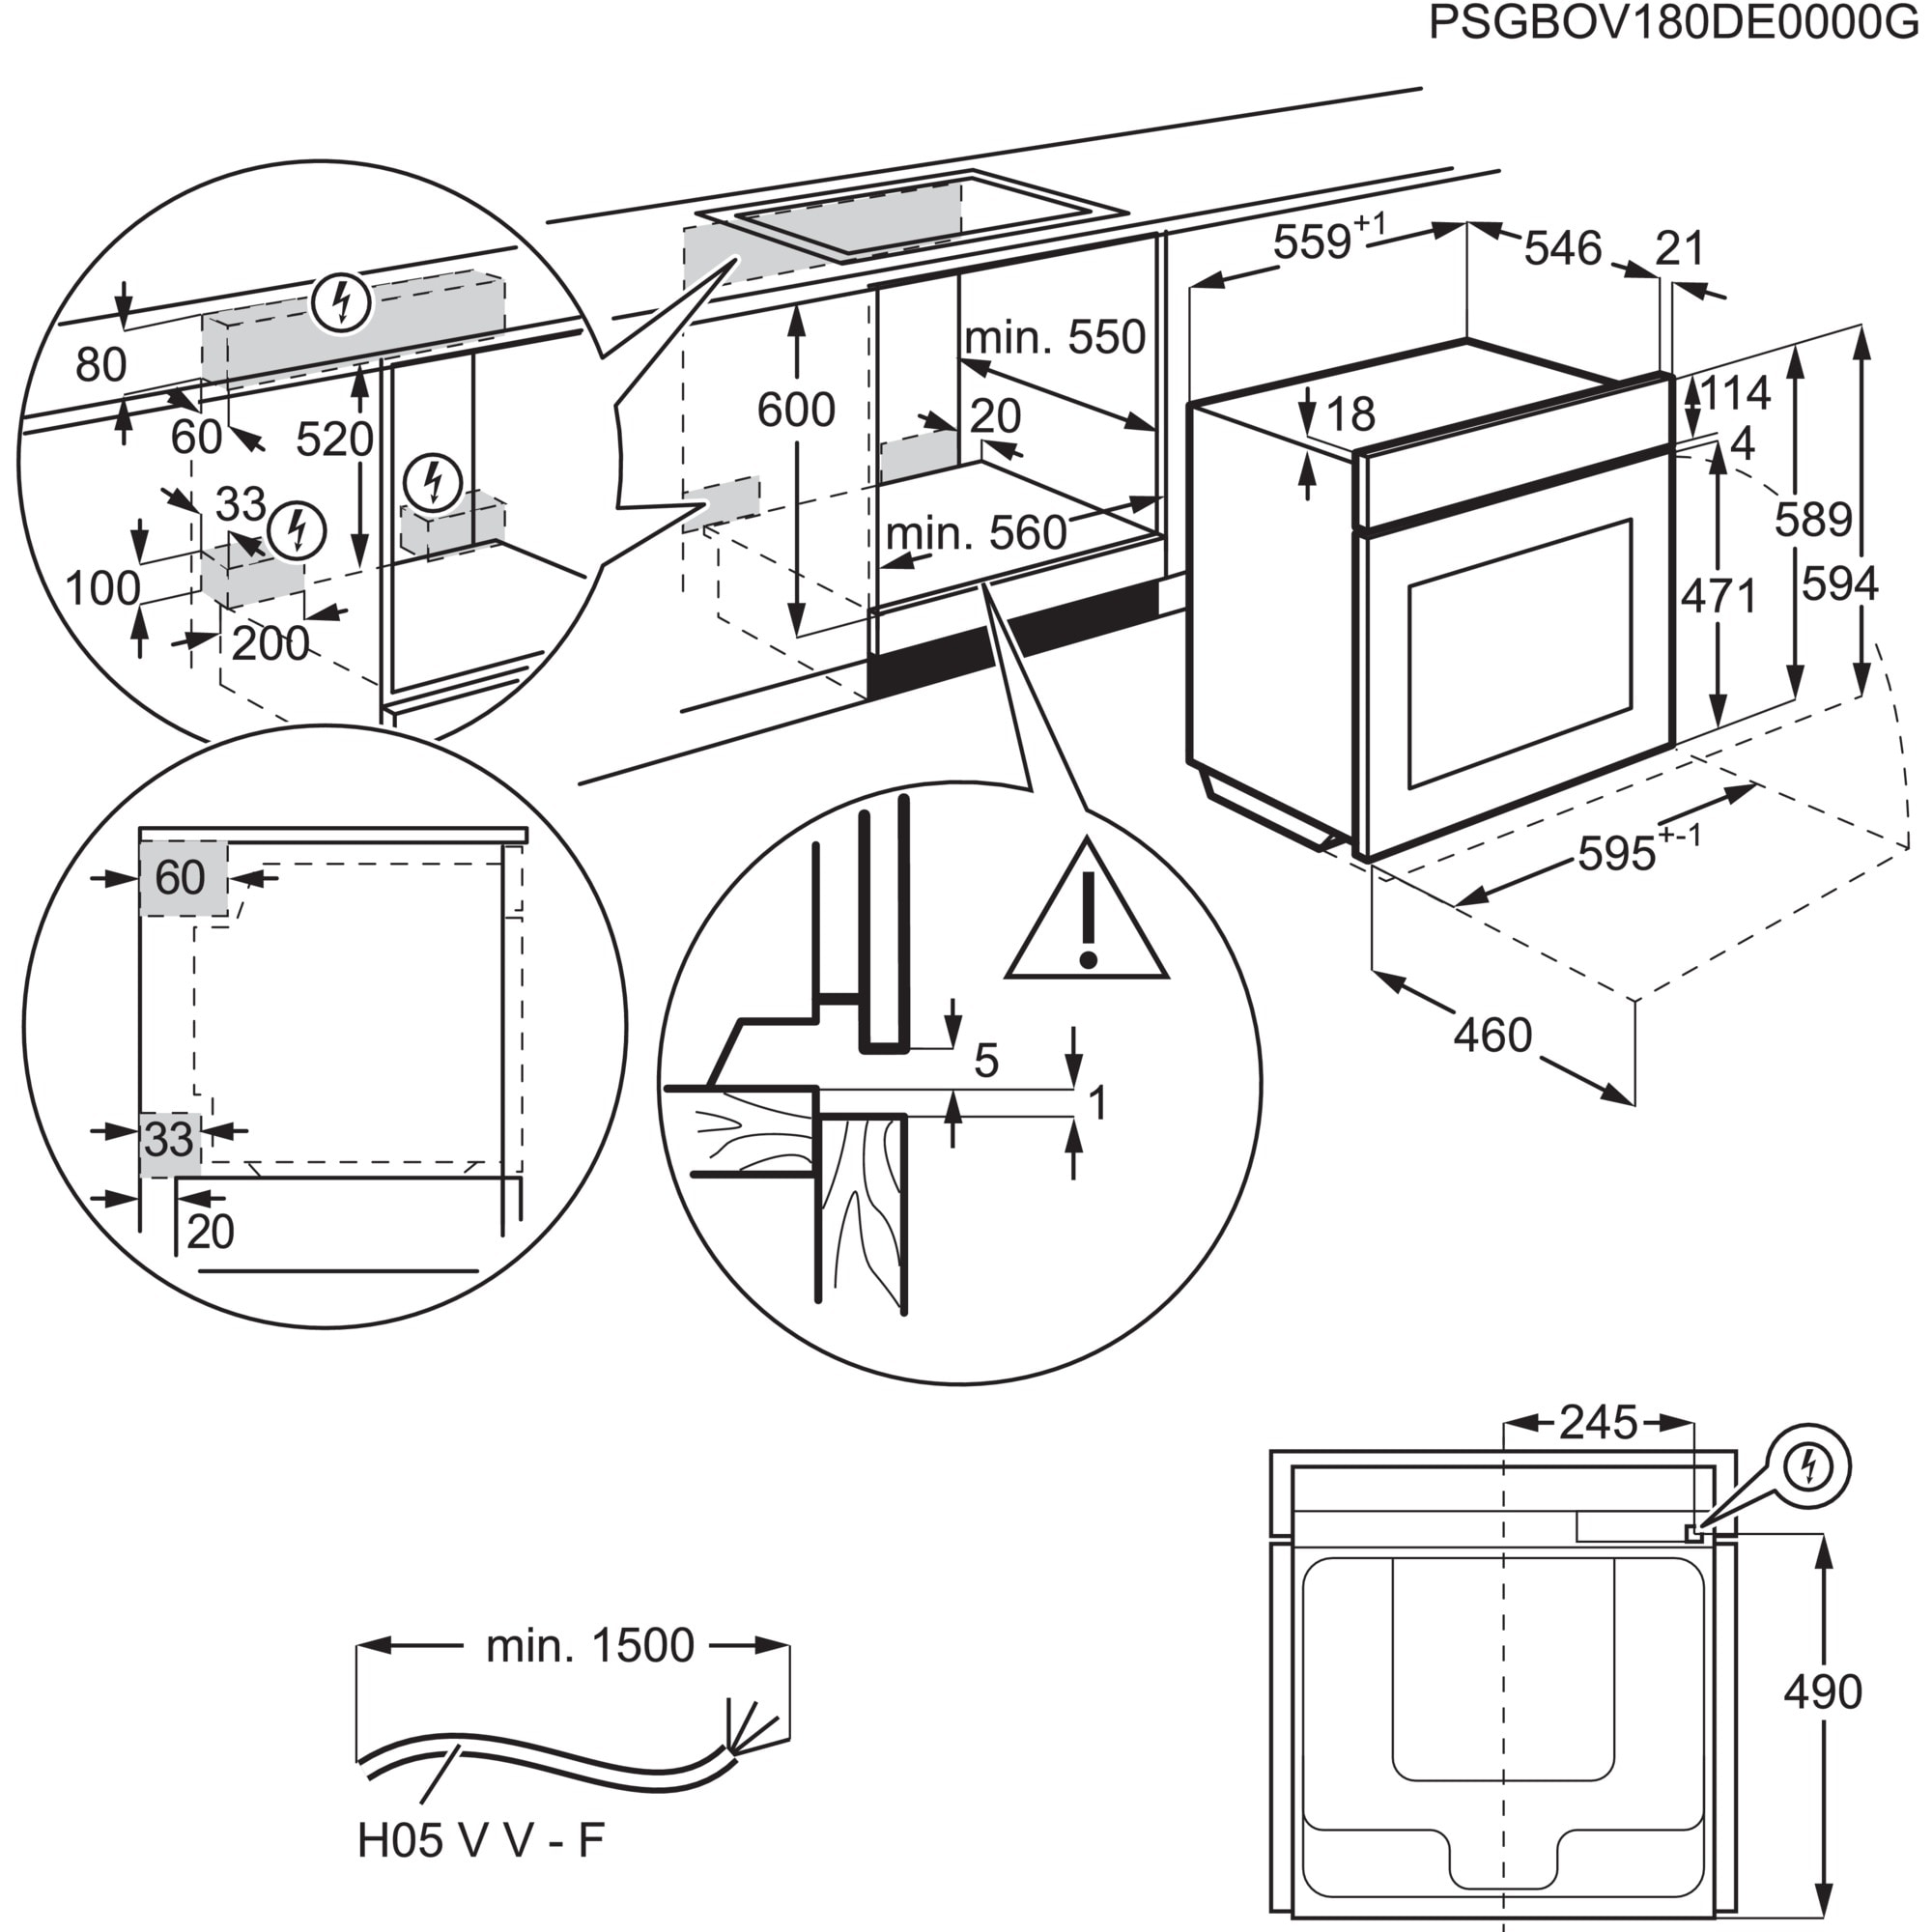 AEG BEK435060B multifunctionele oven - 60cm